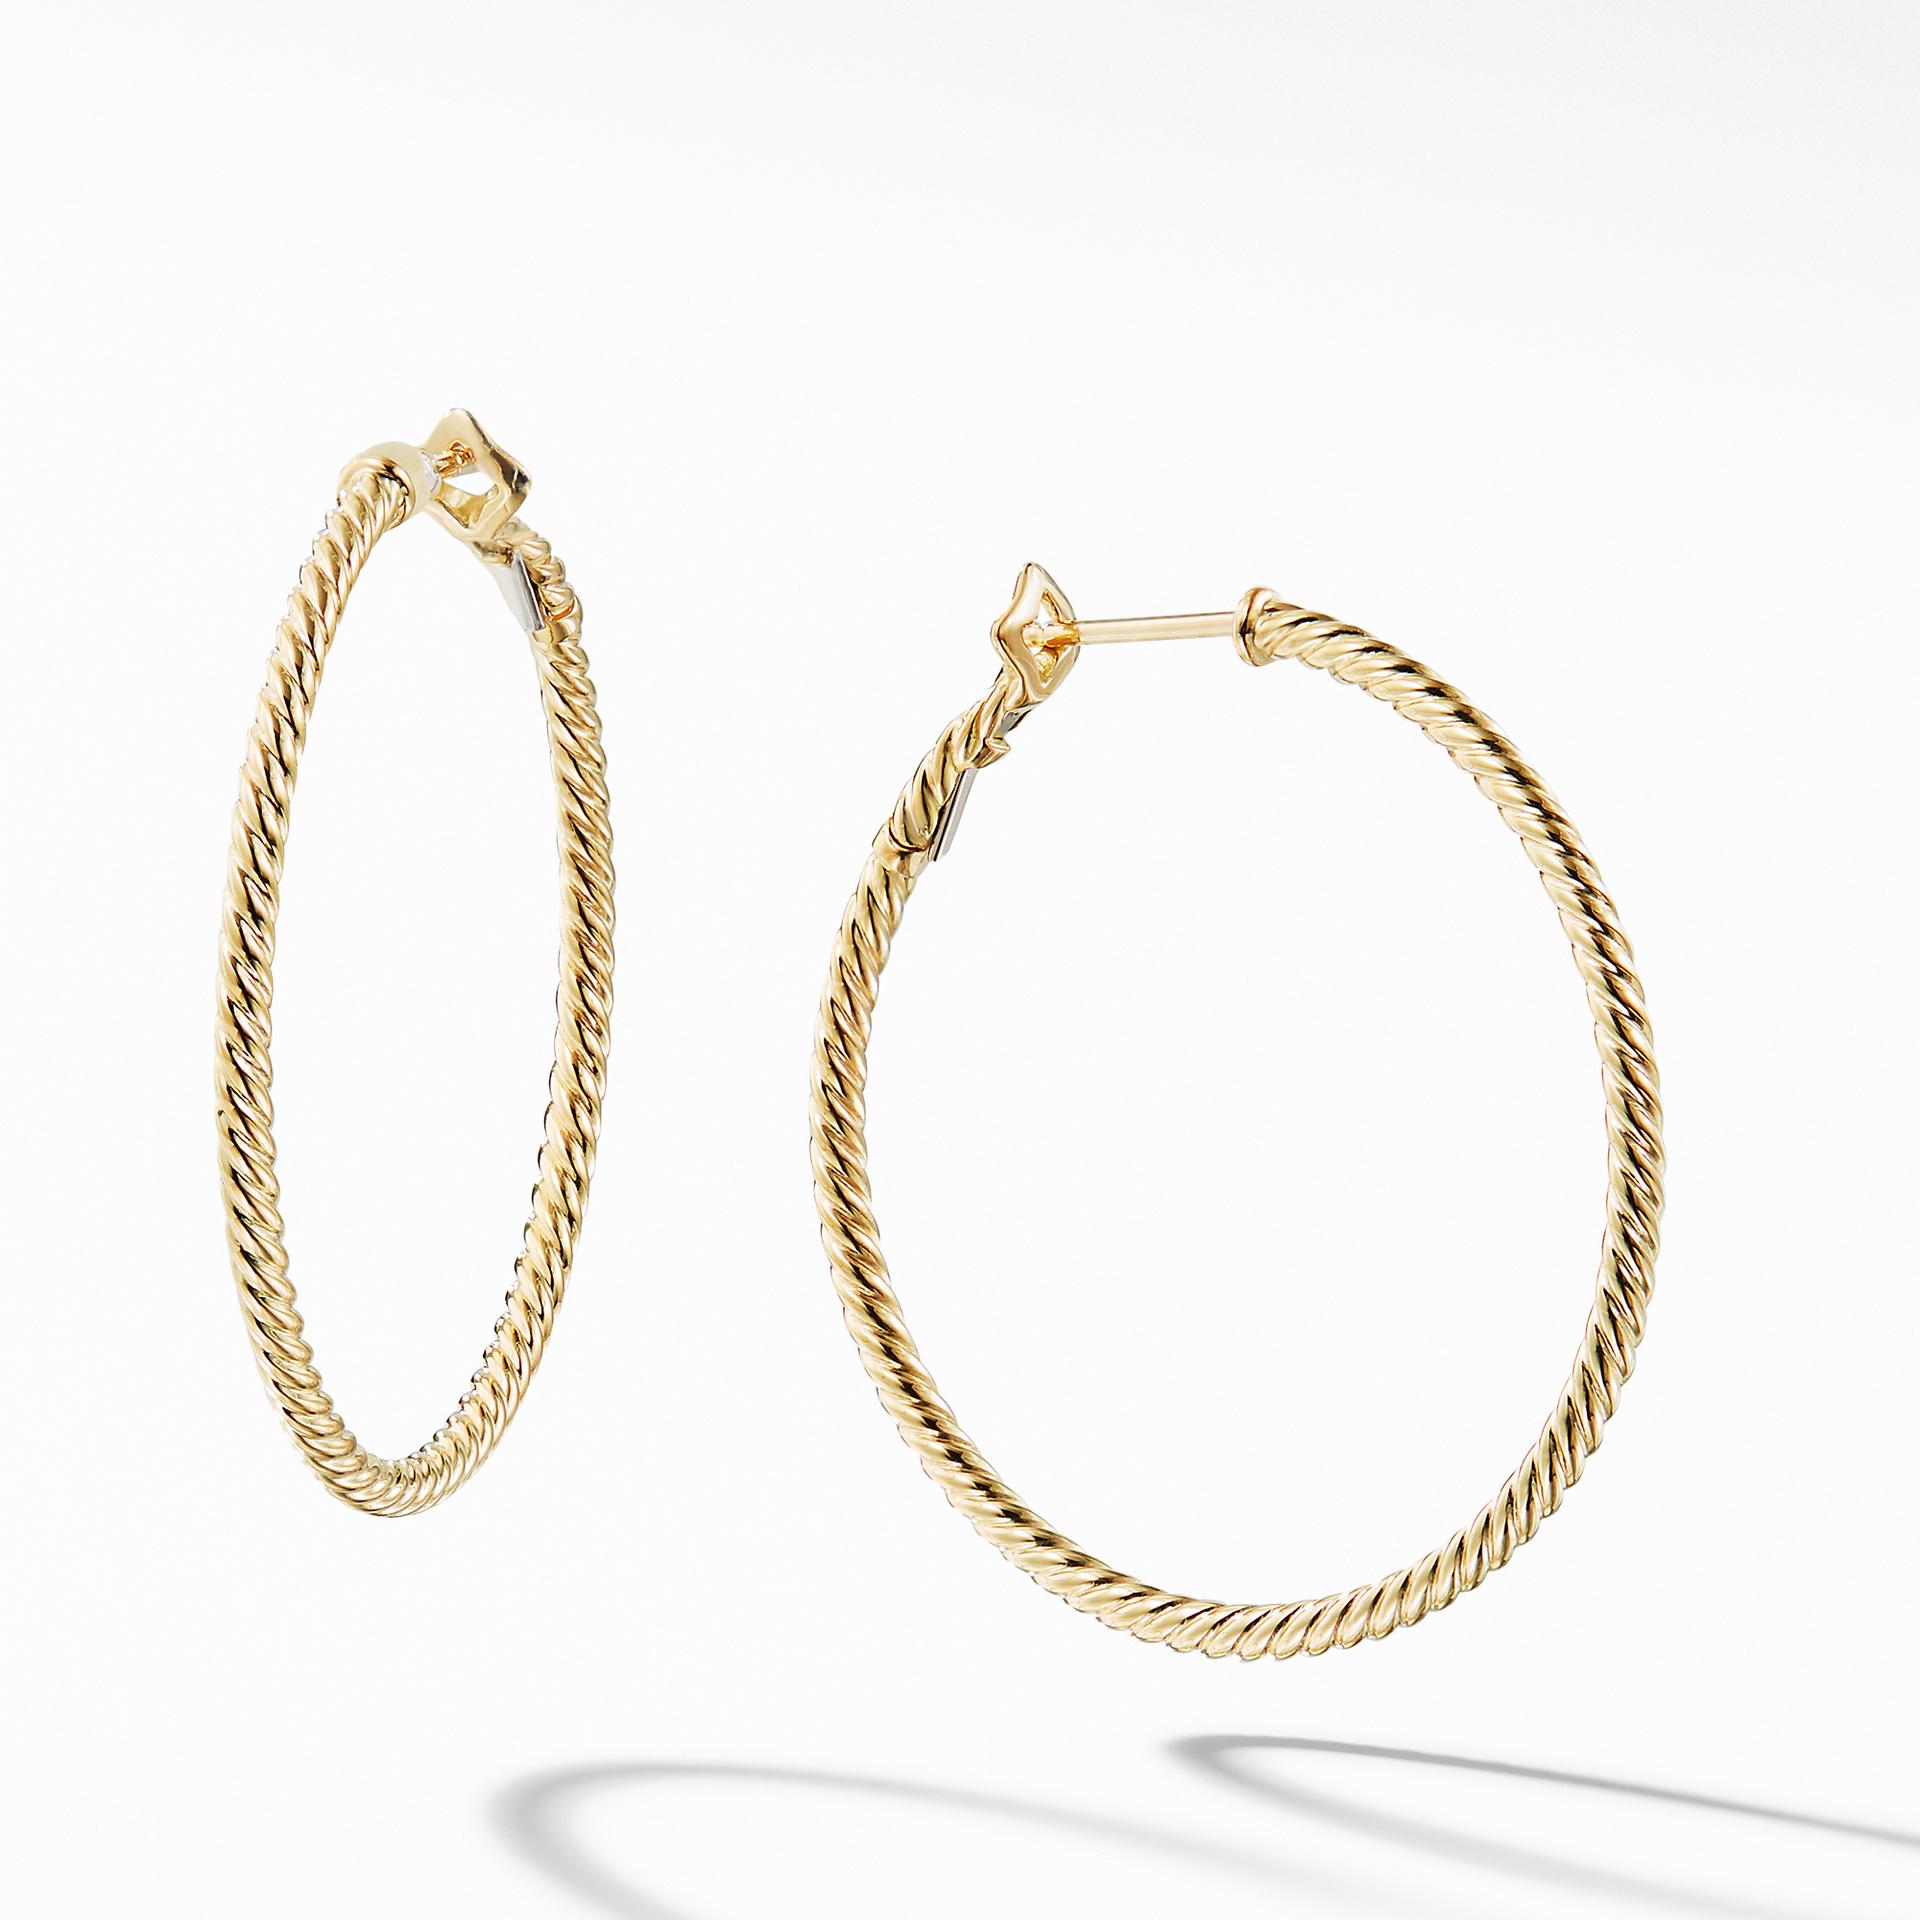 David Yurman Cable Classics Hoop Earrings in Gold, 1.25" 0